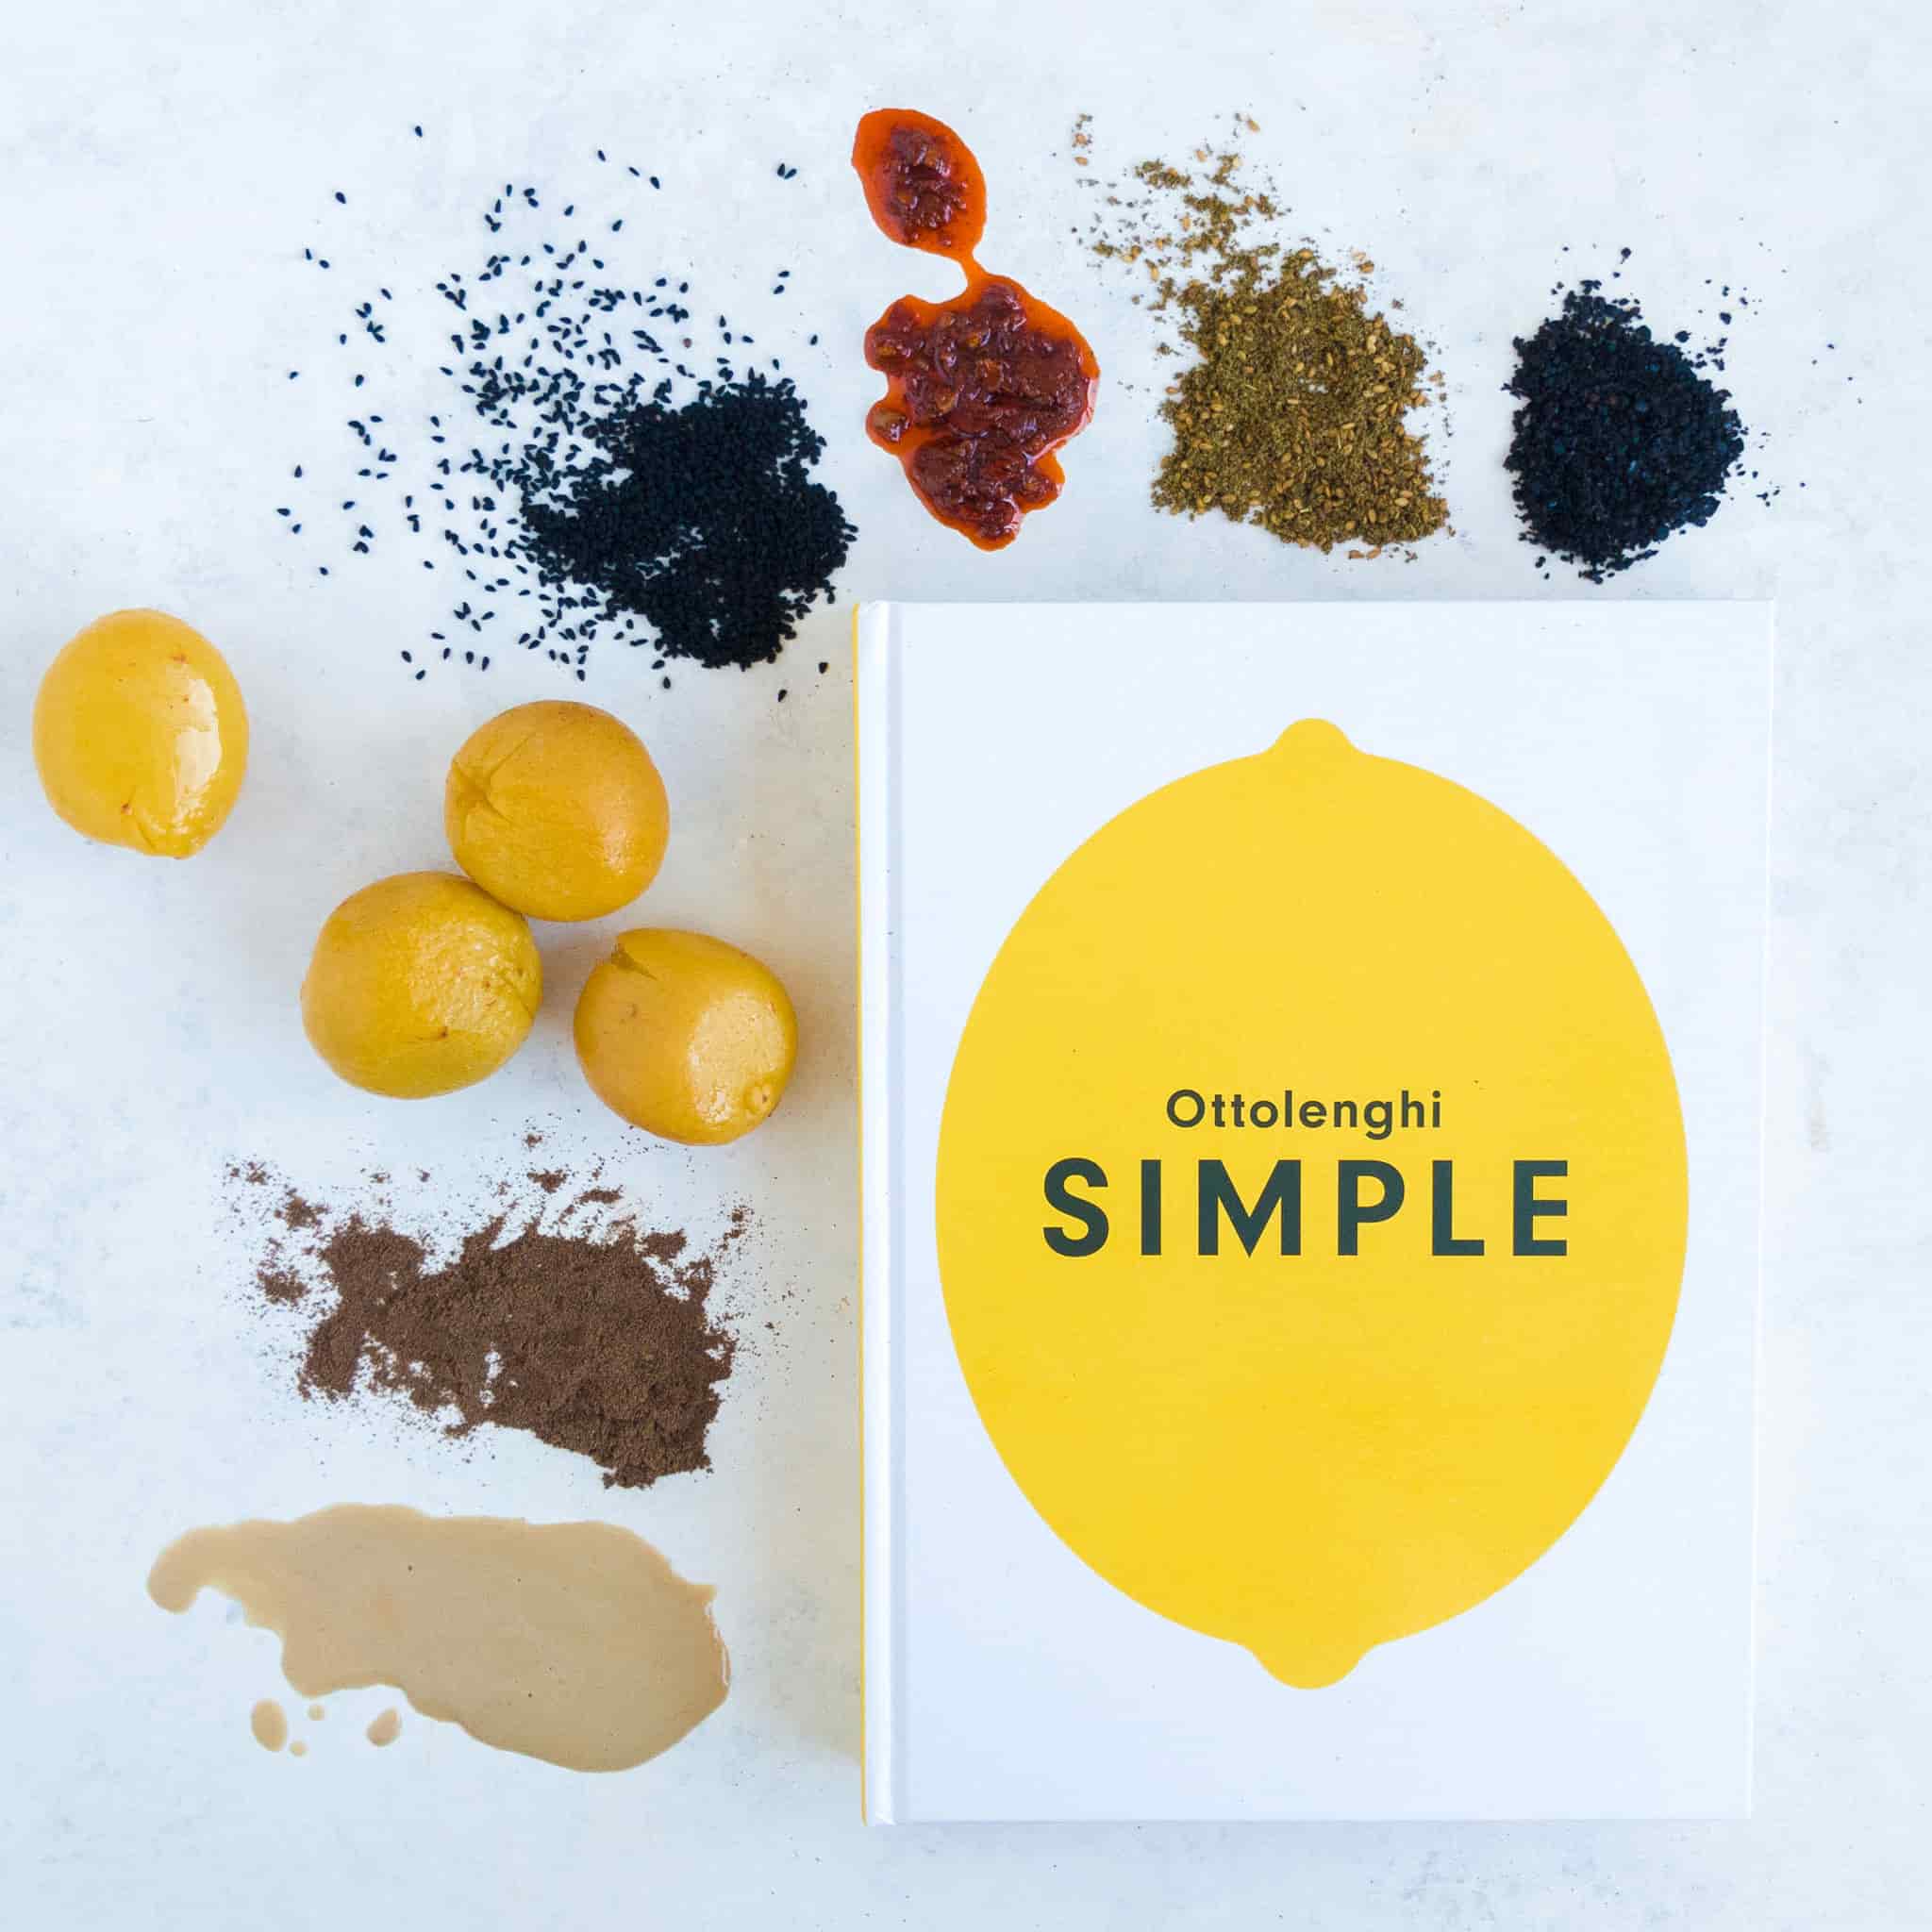 Ottolenghi Simple Cookbook & Ingredients Set